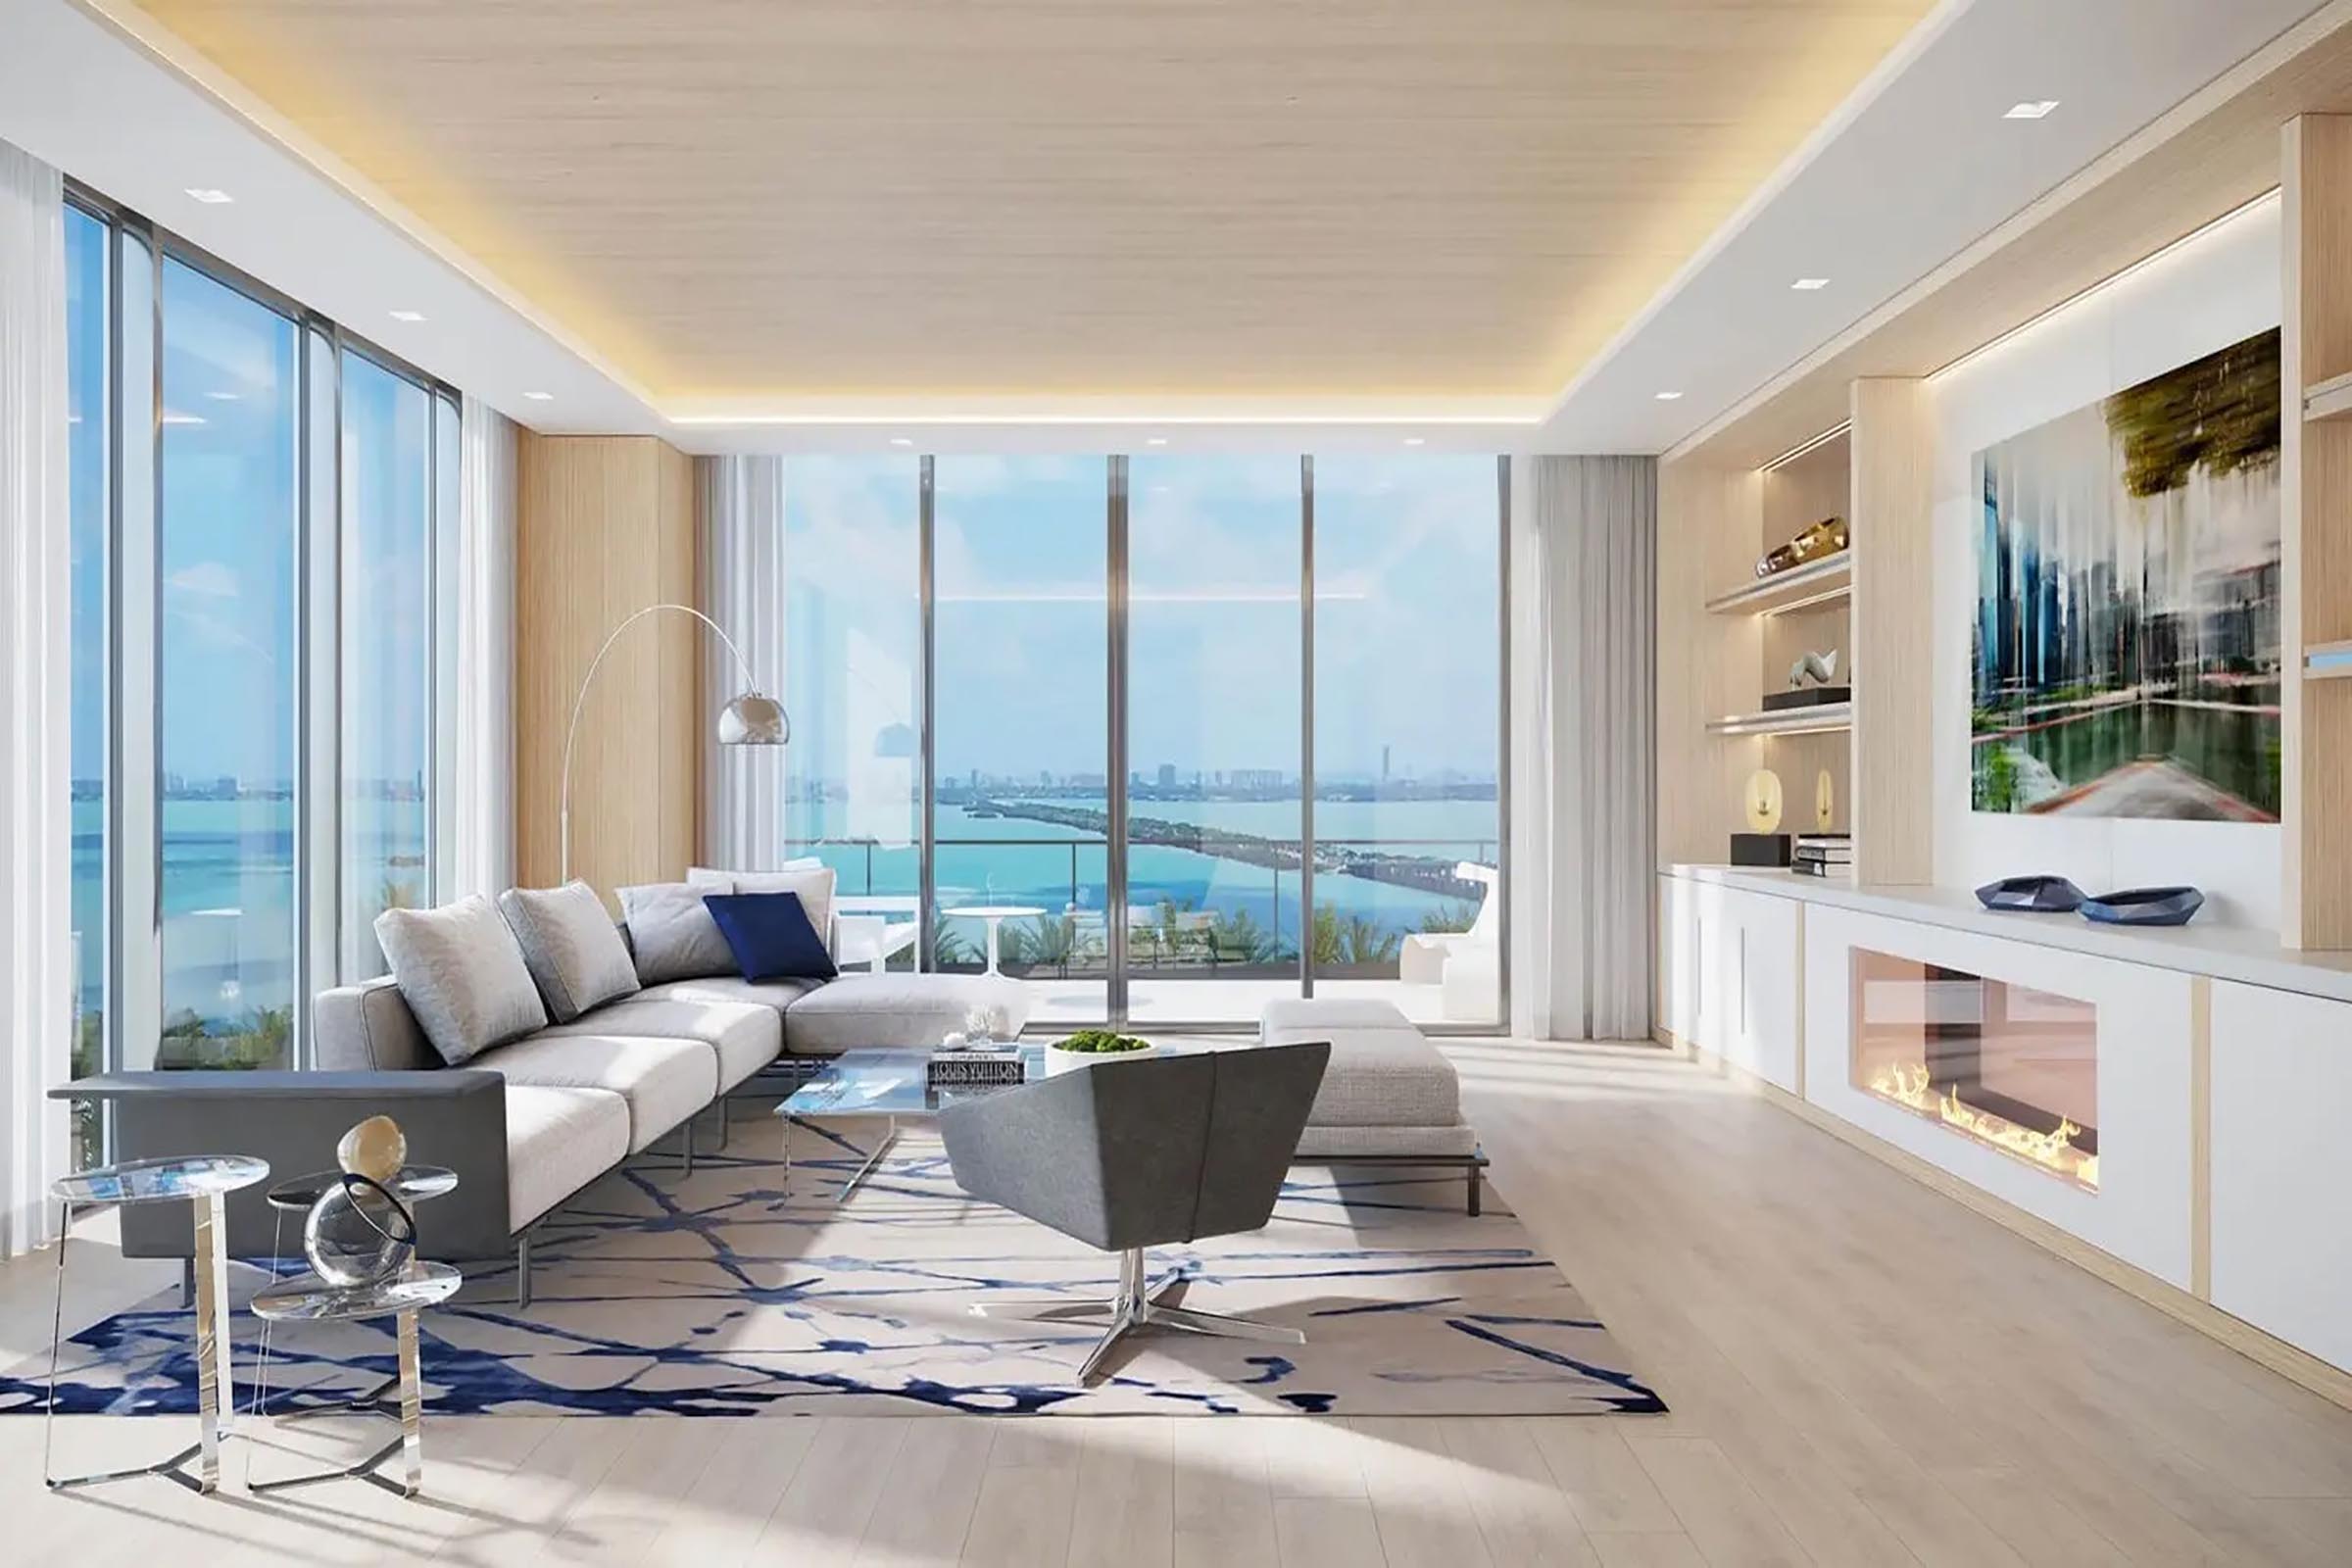 Architectural Digest’s List Of Top Miami Interior Designers